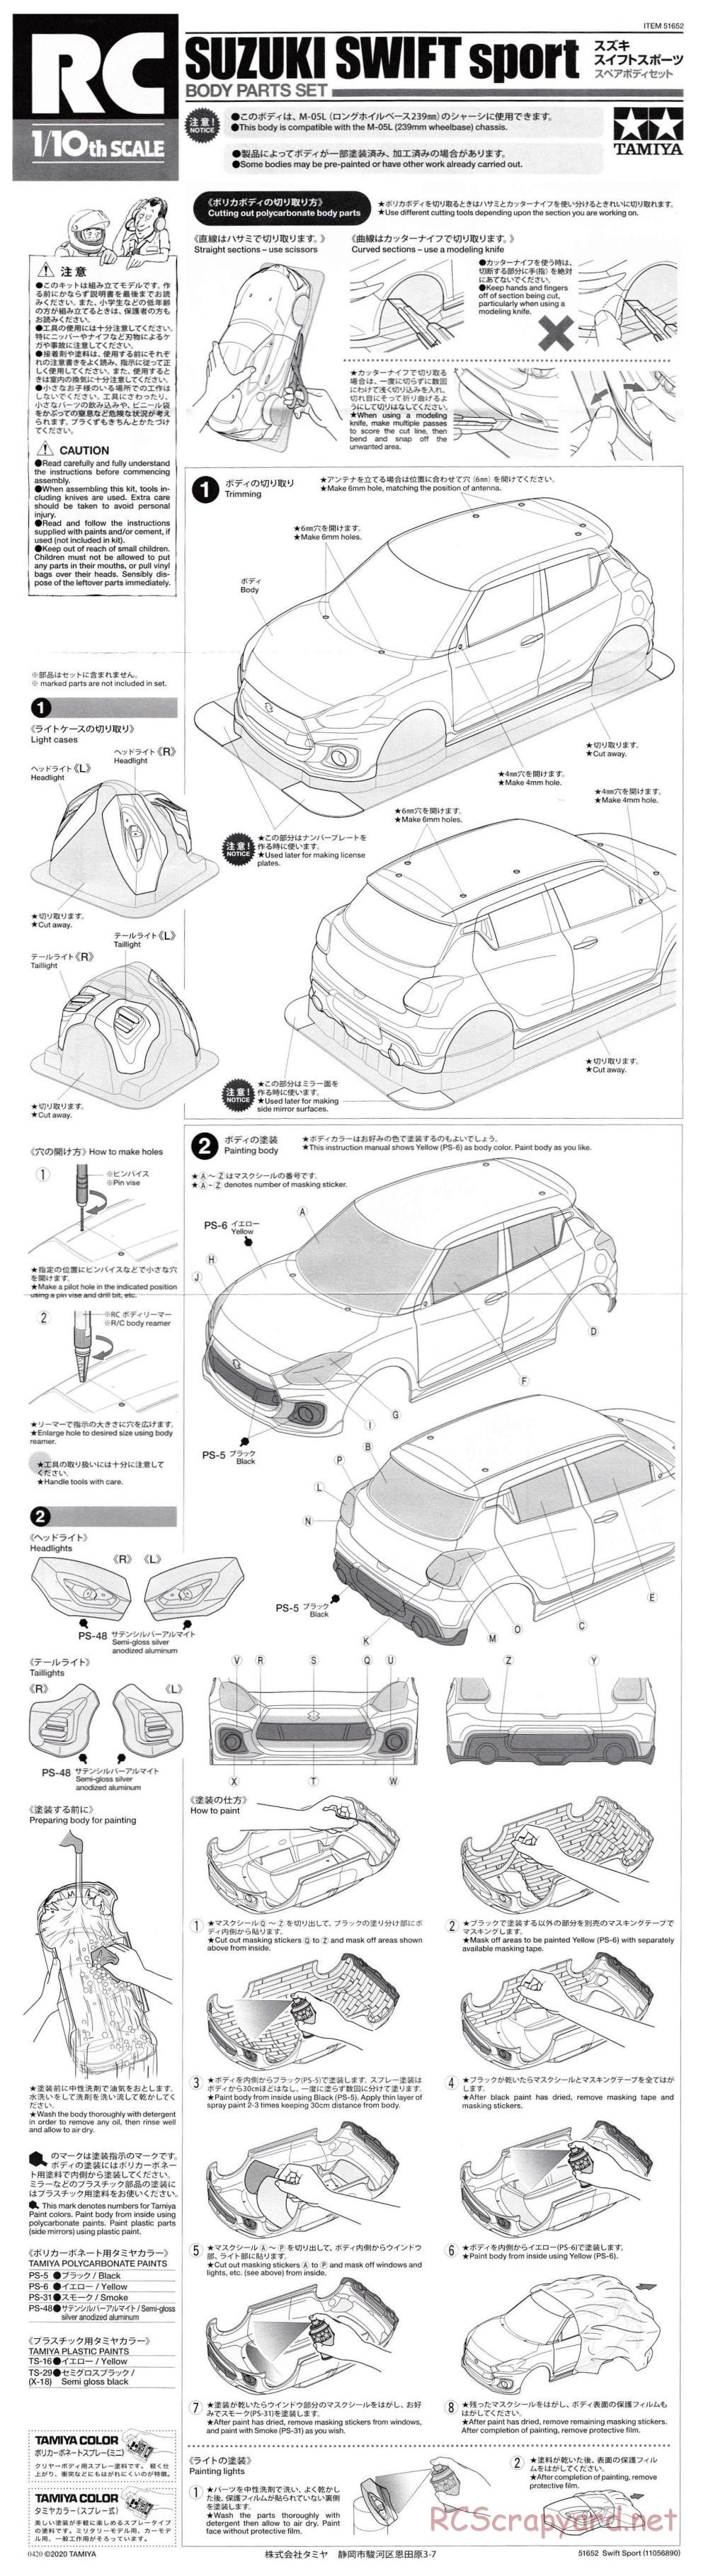 Tamiya - Suzuki Swift Sport - M-05 Chassis - Body Manual - Page 1